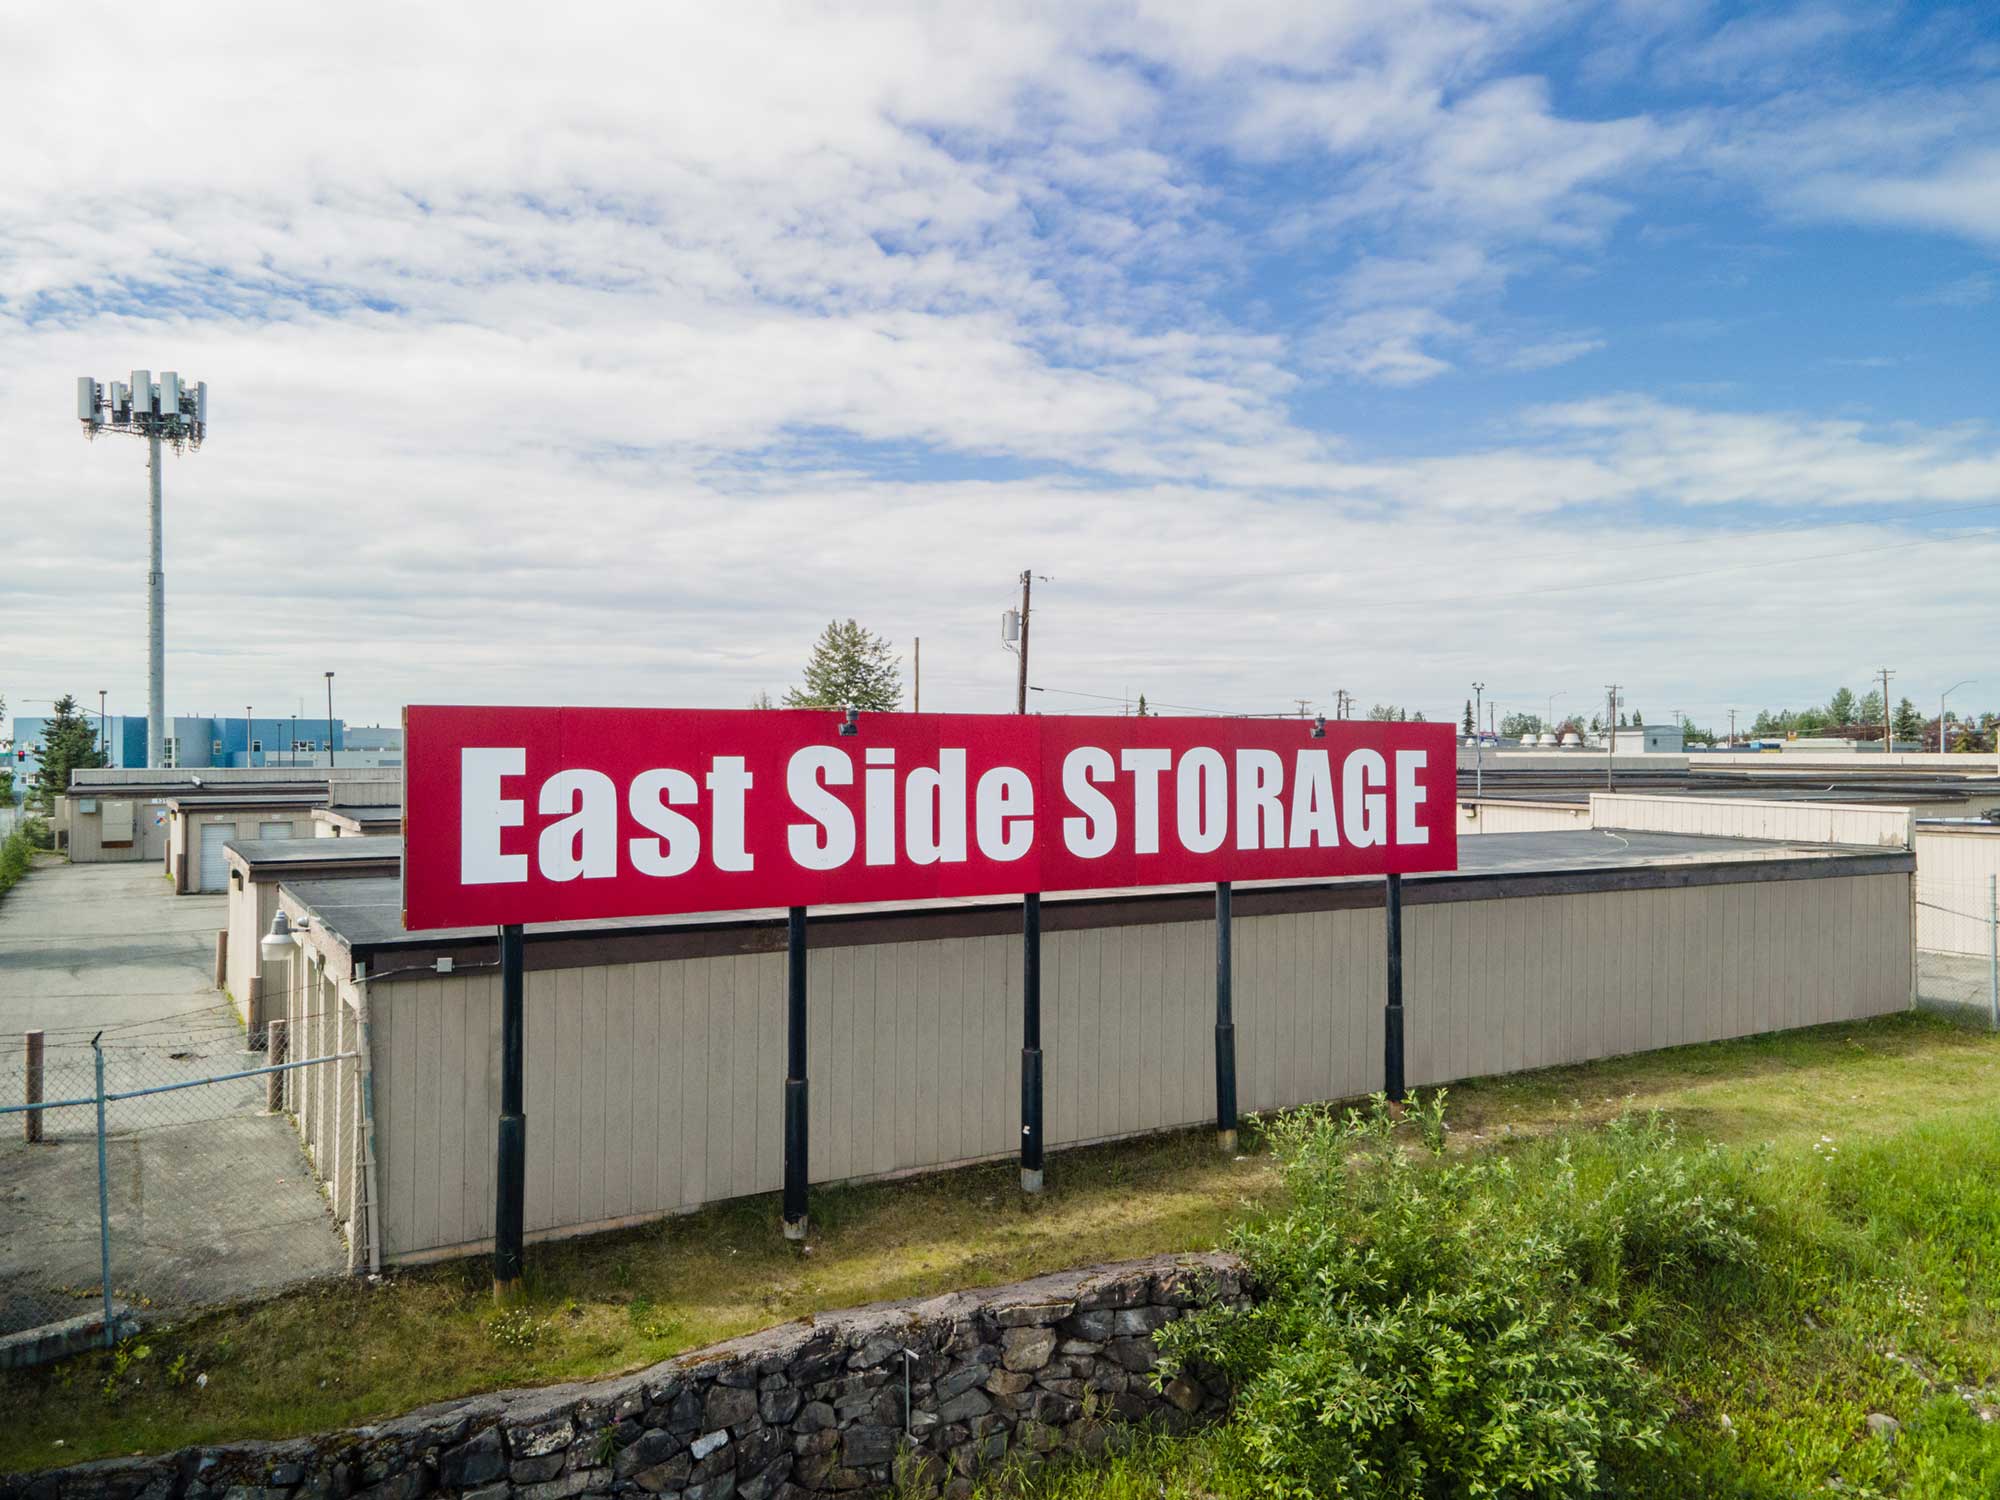 Large sign reading "East Side STORAGE"